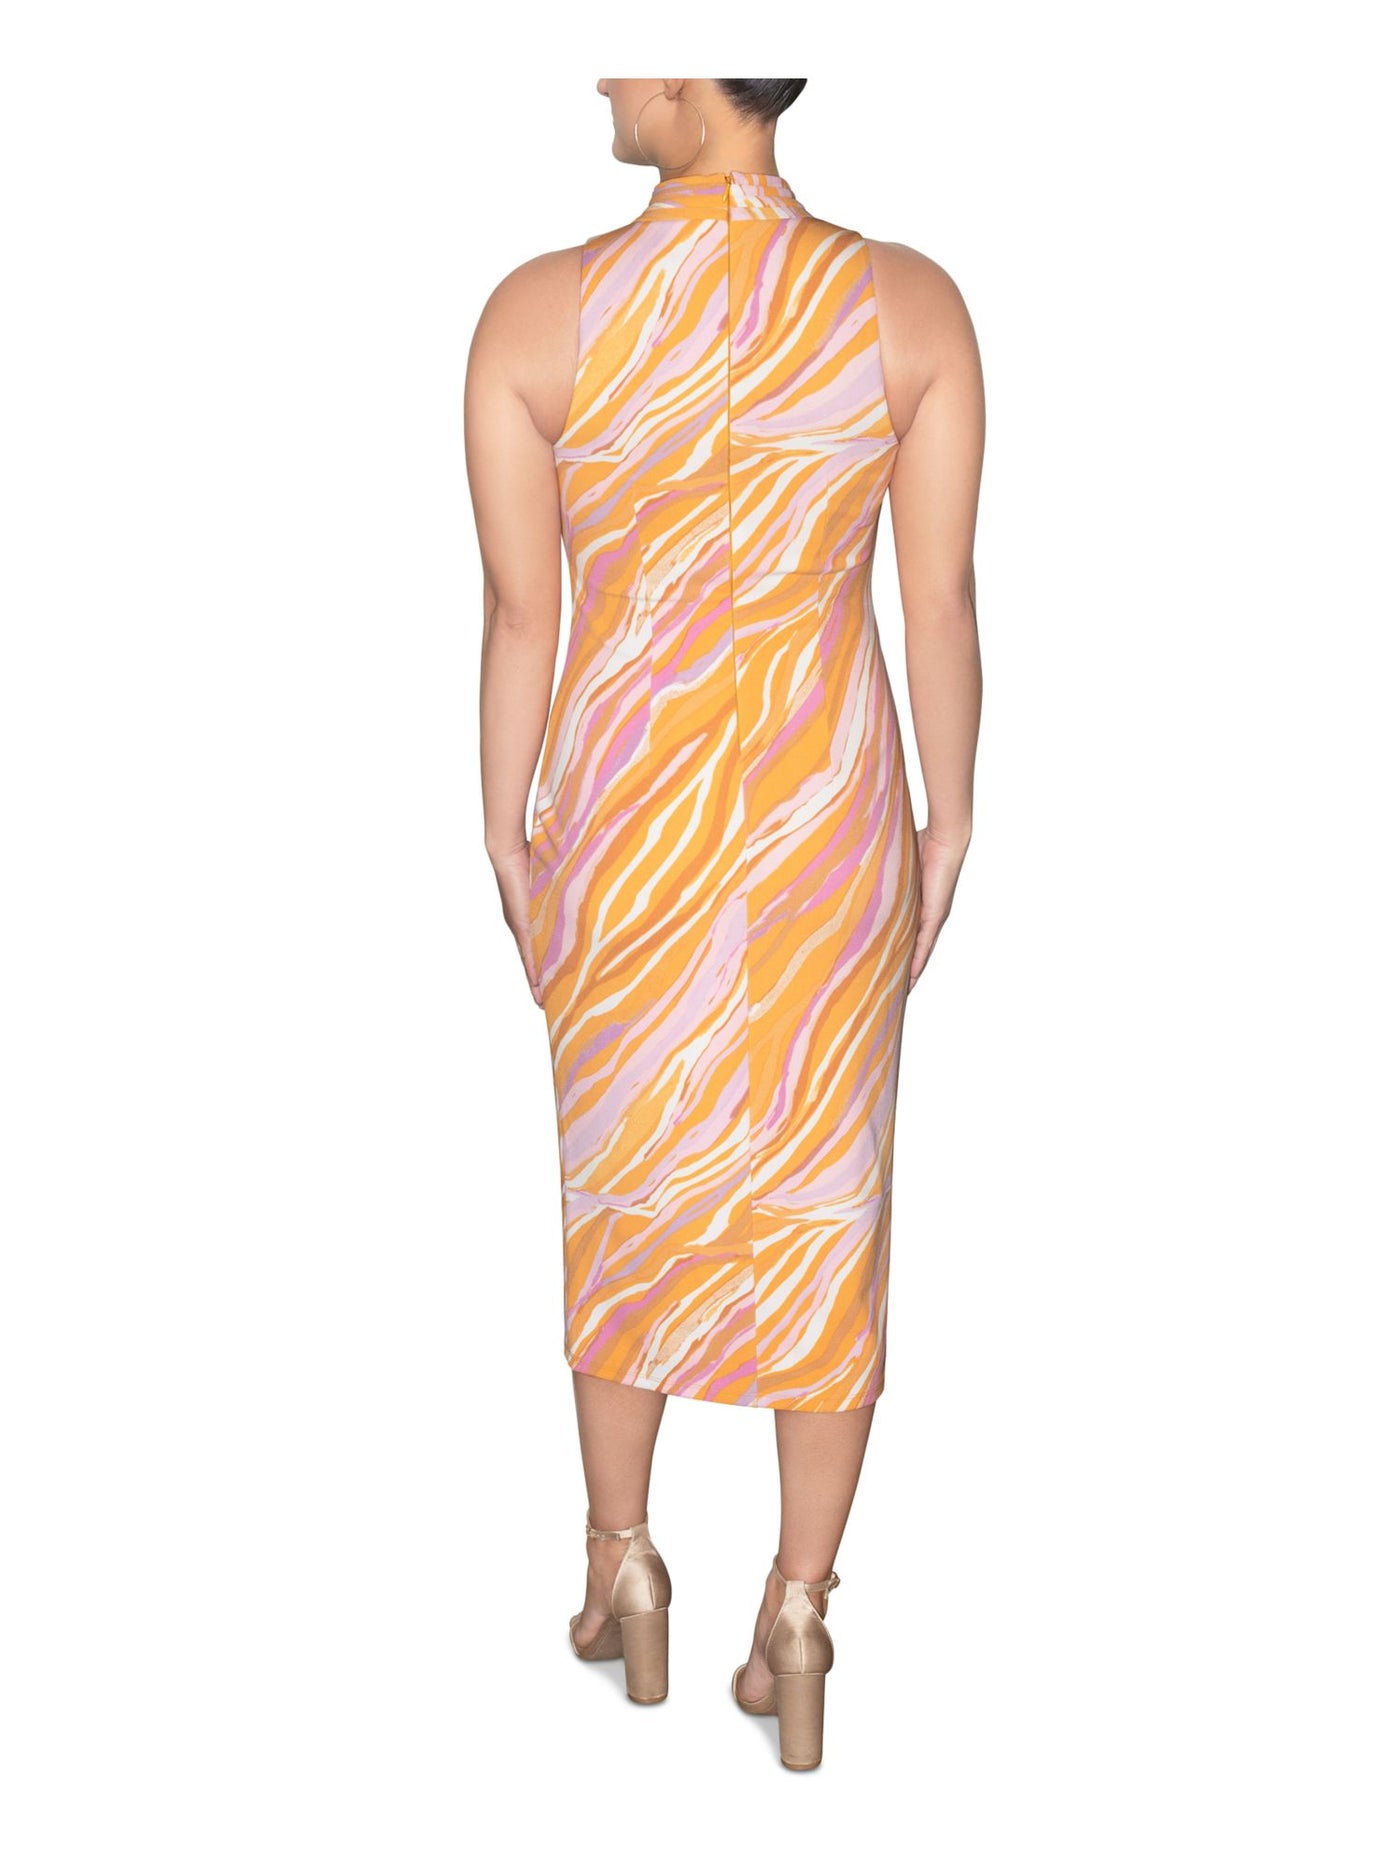 RACHEL RACHEL ROY Womens Orange Zippered Cut Out Pleated Crossover Printed Sleeveless Mock Neck Midi Evening Sheath Dress S